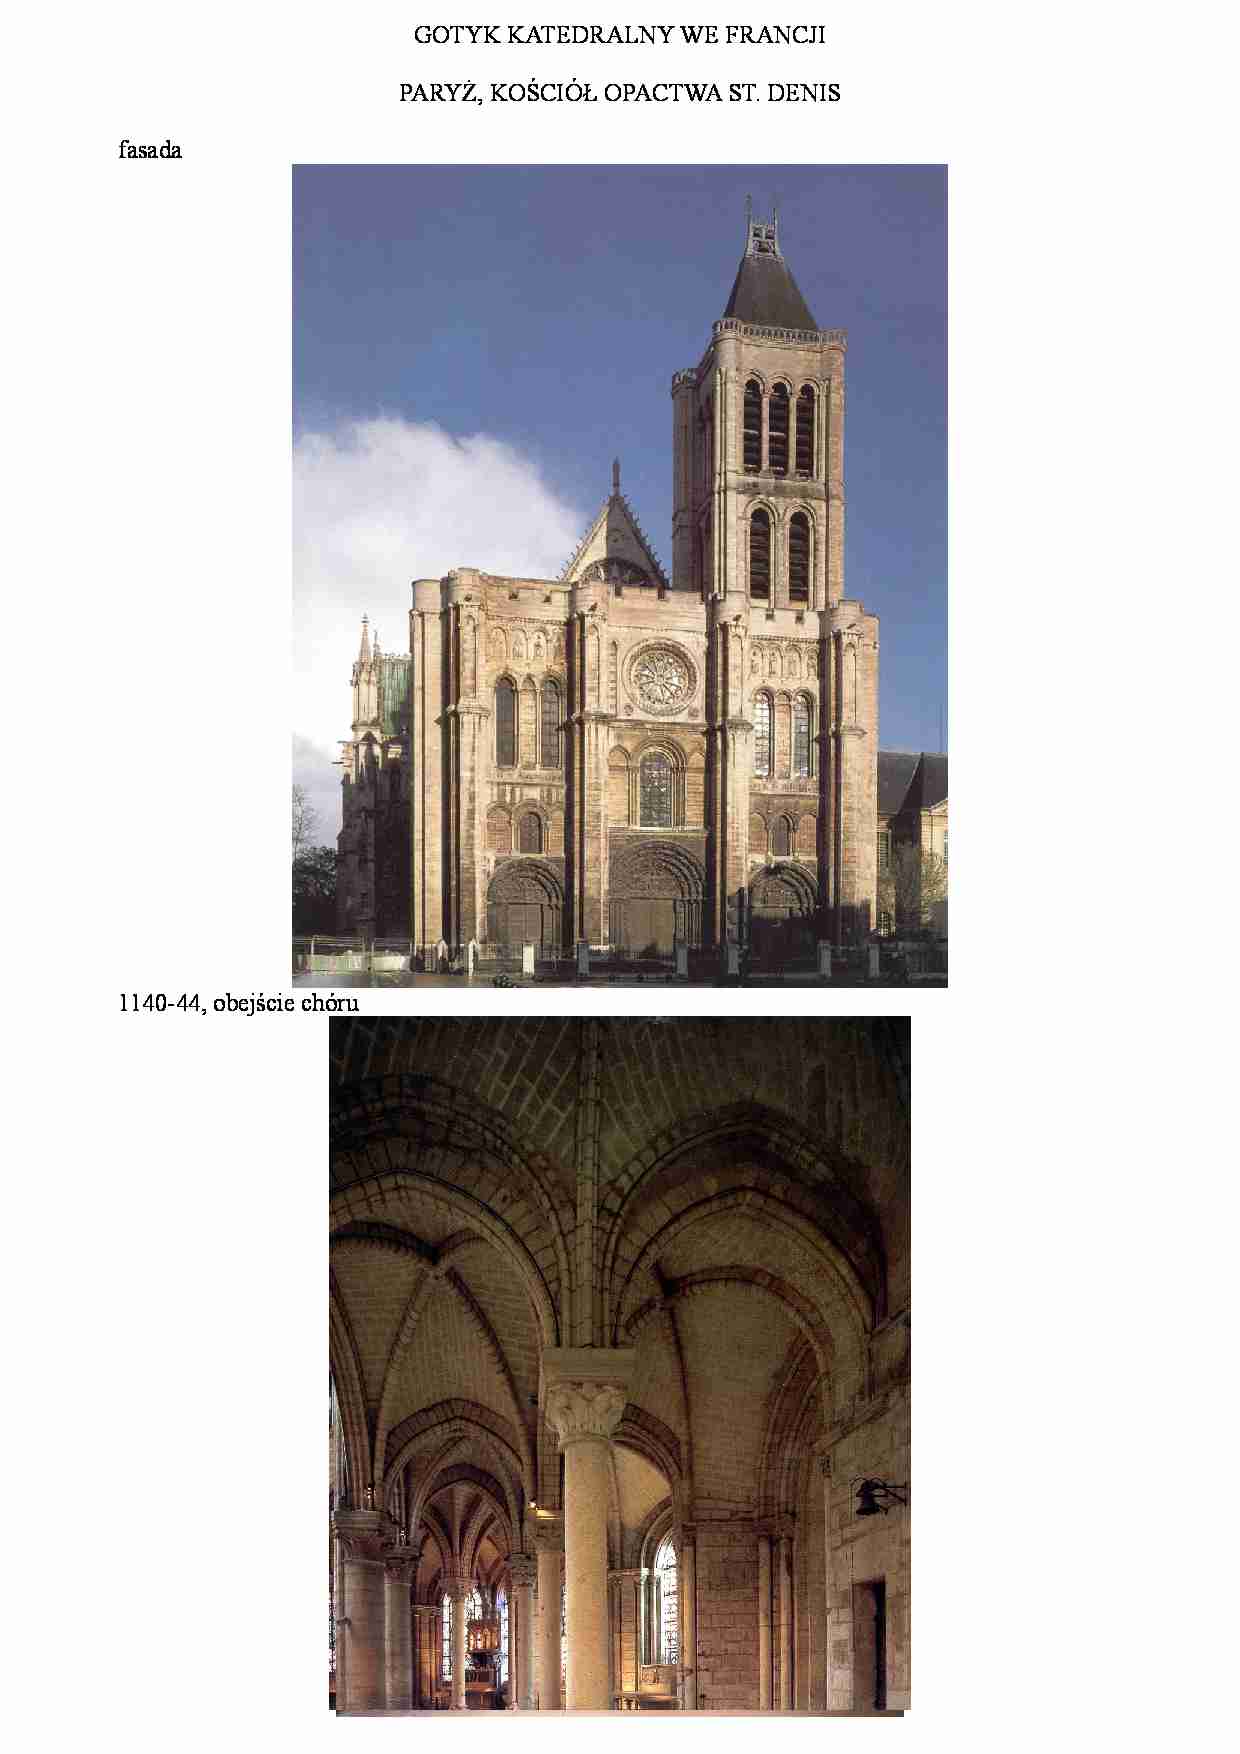 Gotyk katedralny we Francji-St Denis - strona 1